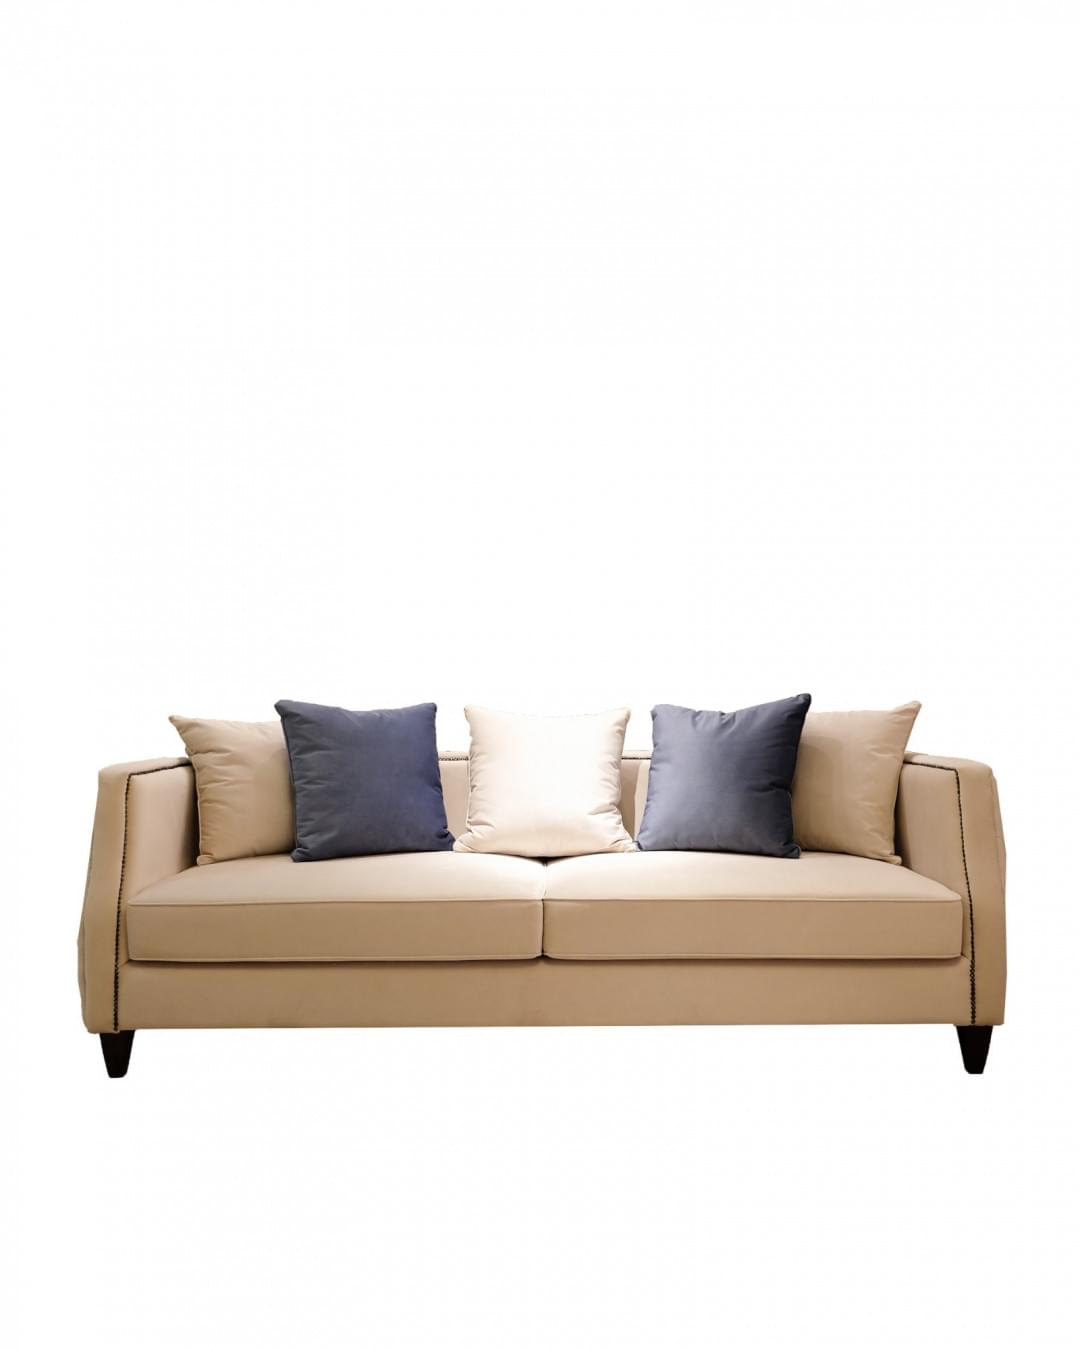 MARCELLE SOFA from Lifetime Design Furniture